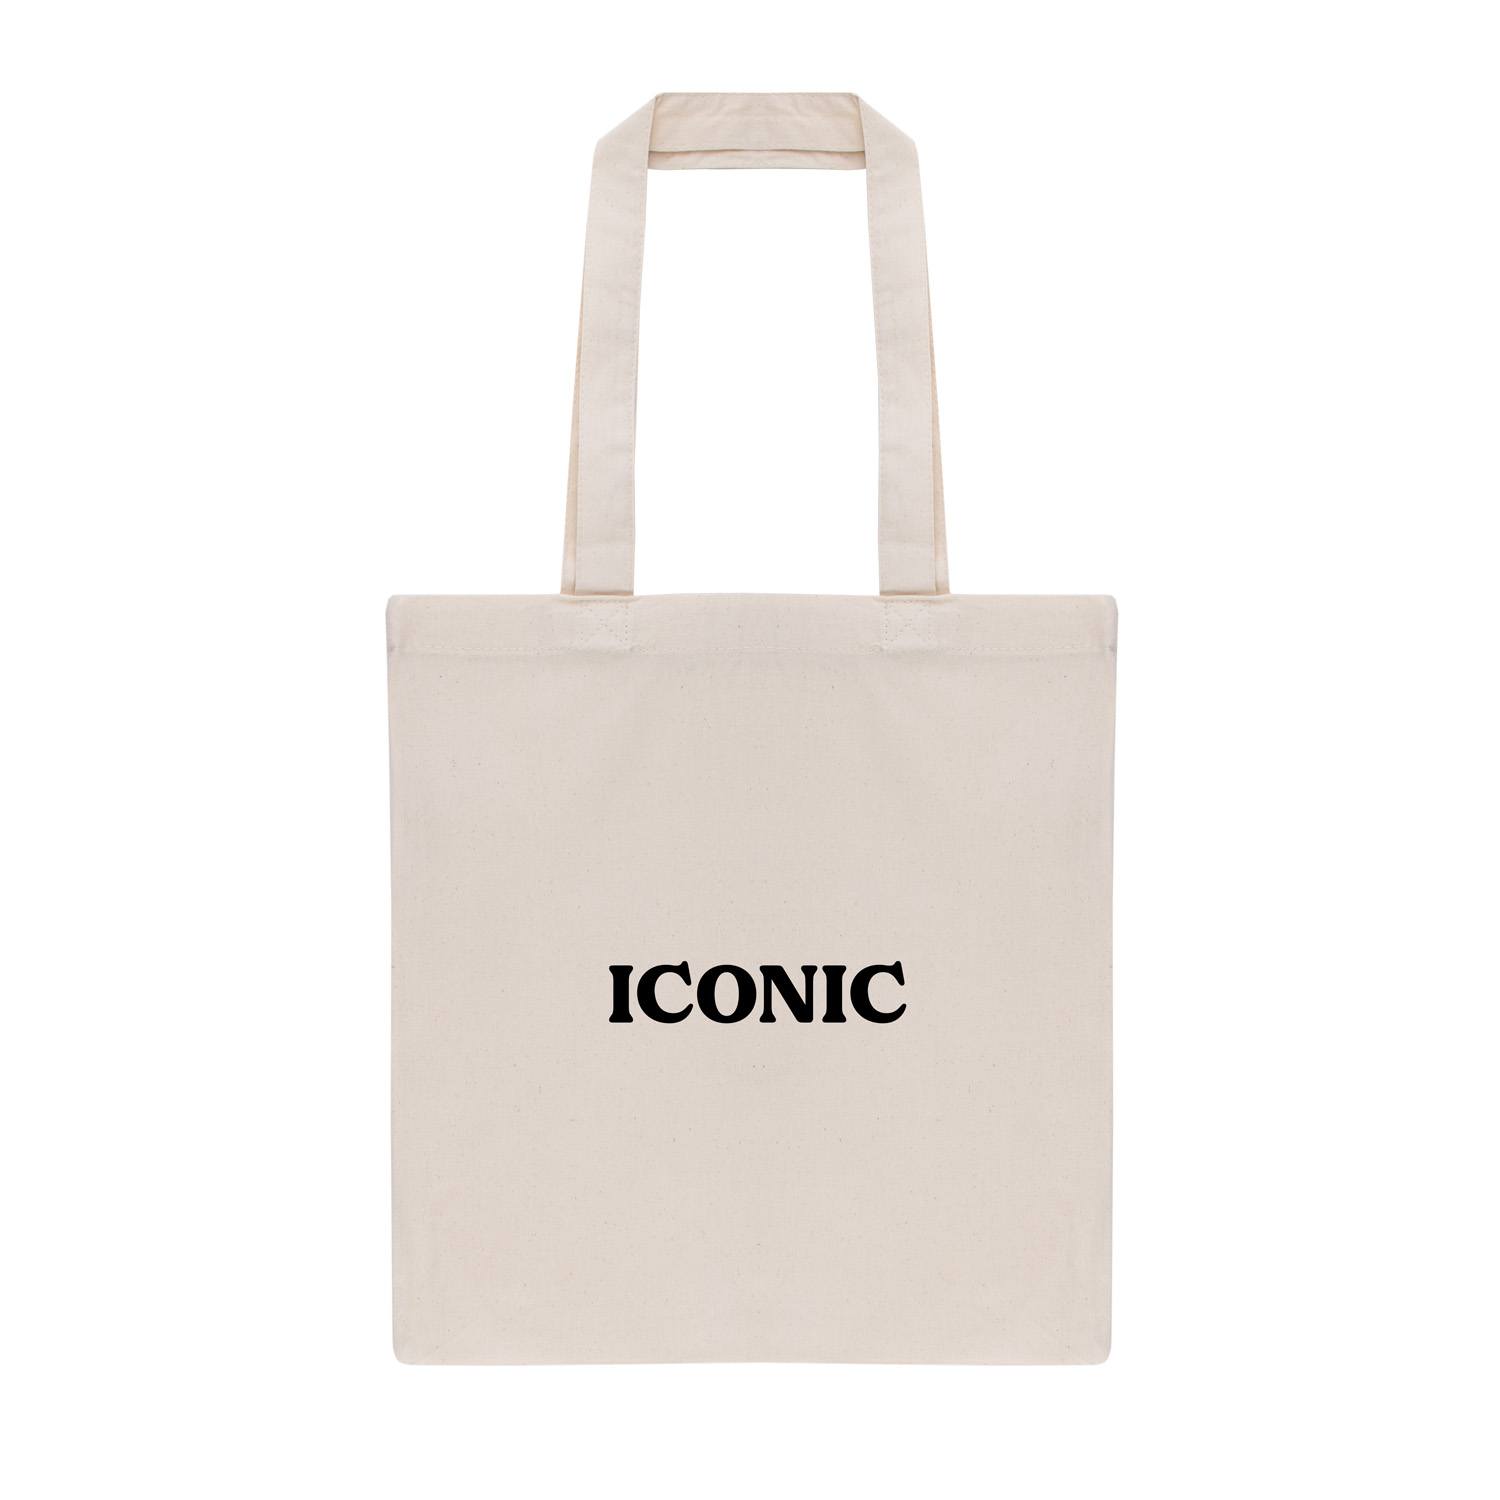 Tote bag | Iconic | my fabulous life.